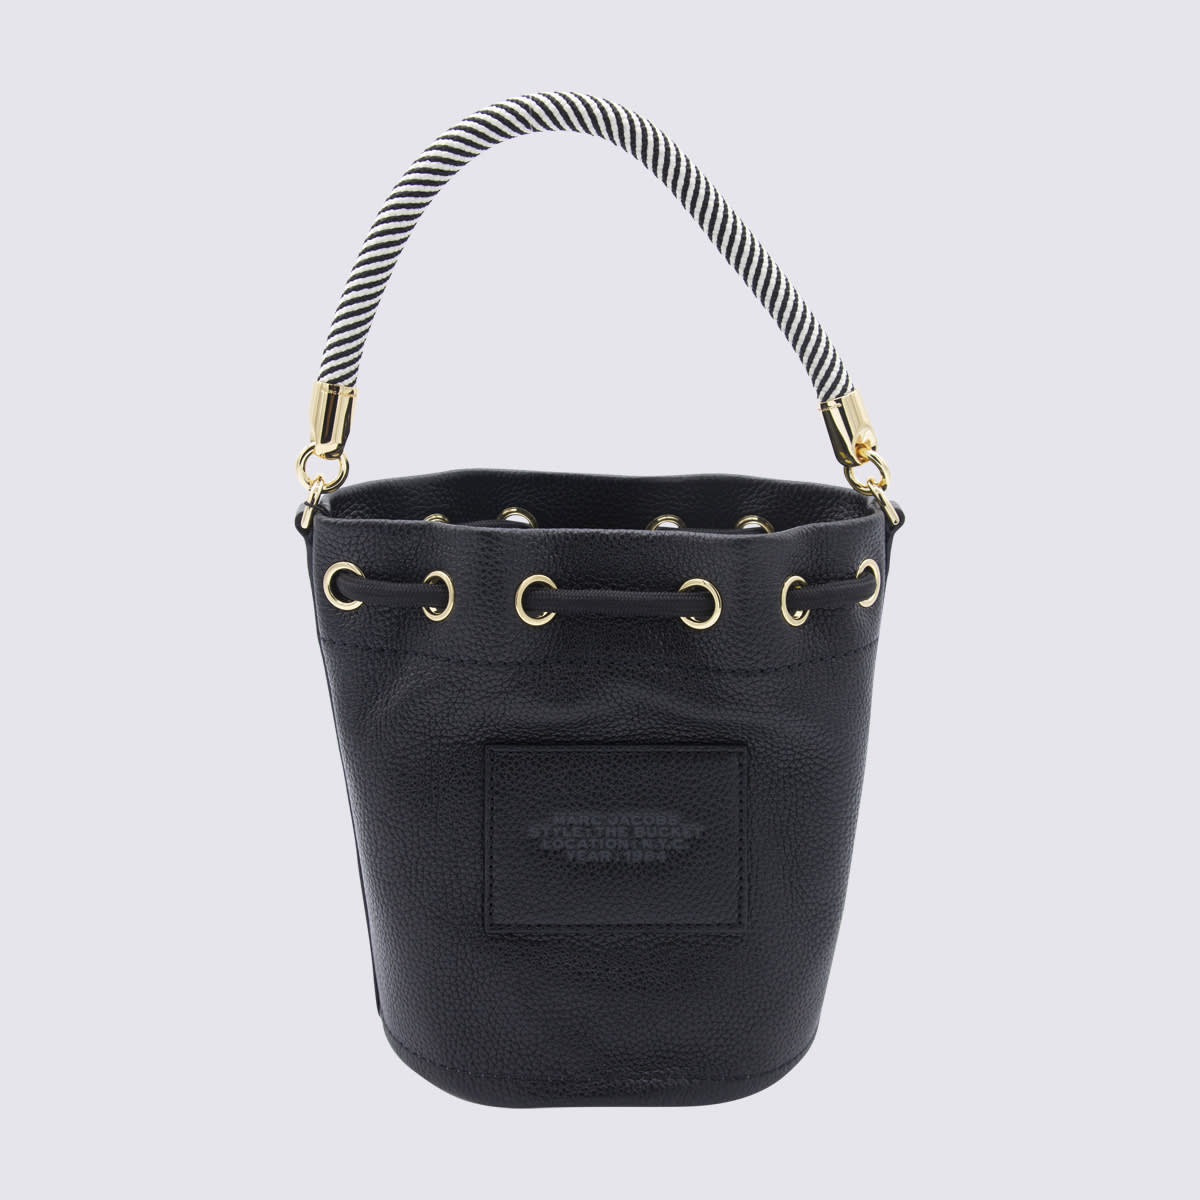 Marc Jacobs Black Leather Bucket Bag